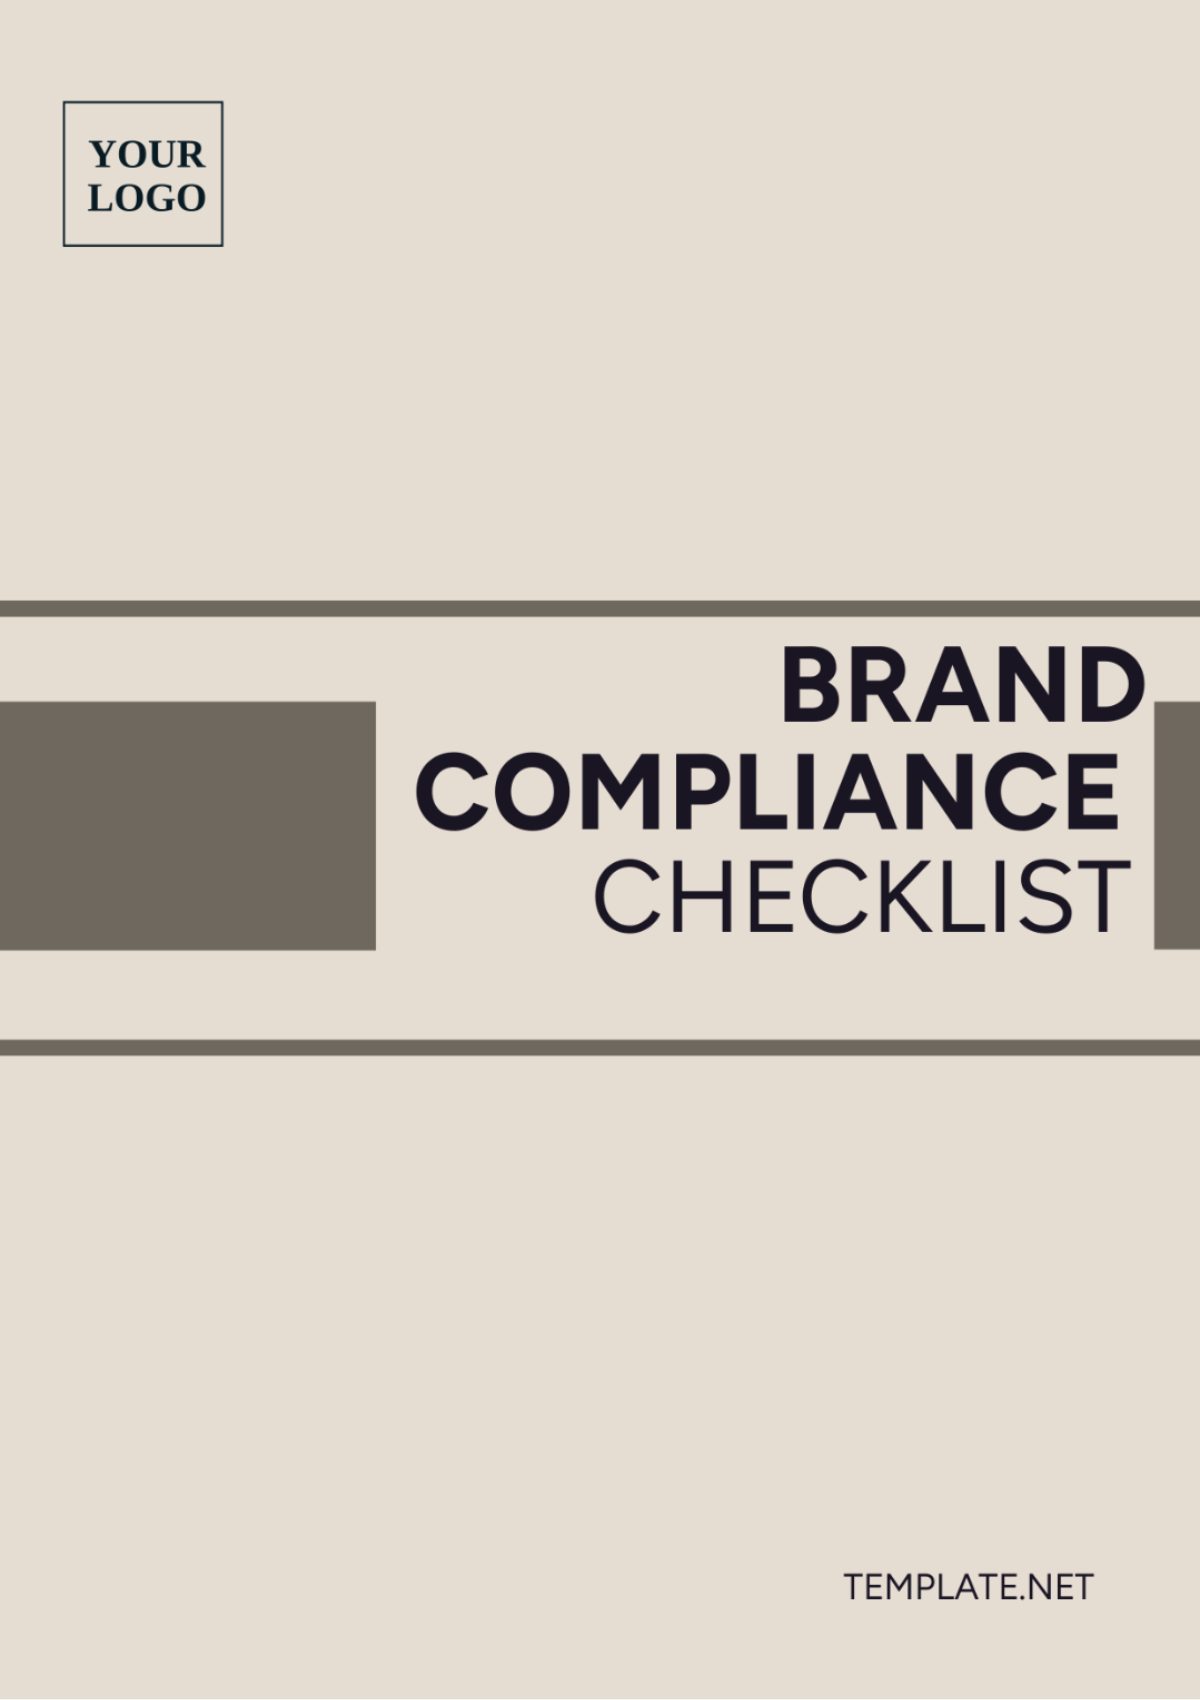 Brand Compliance Checklist Template